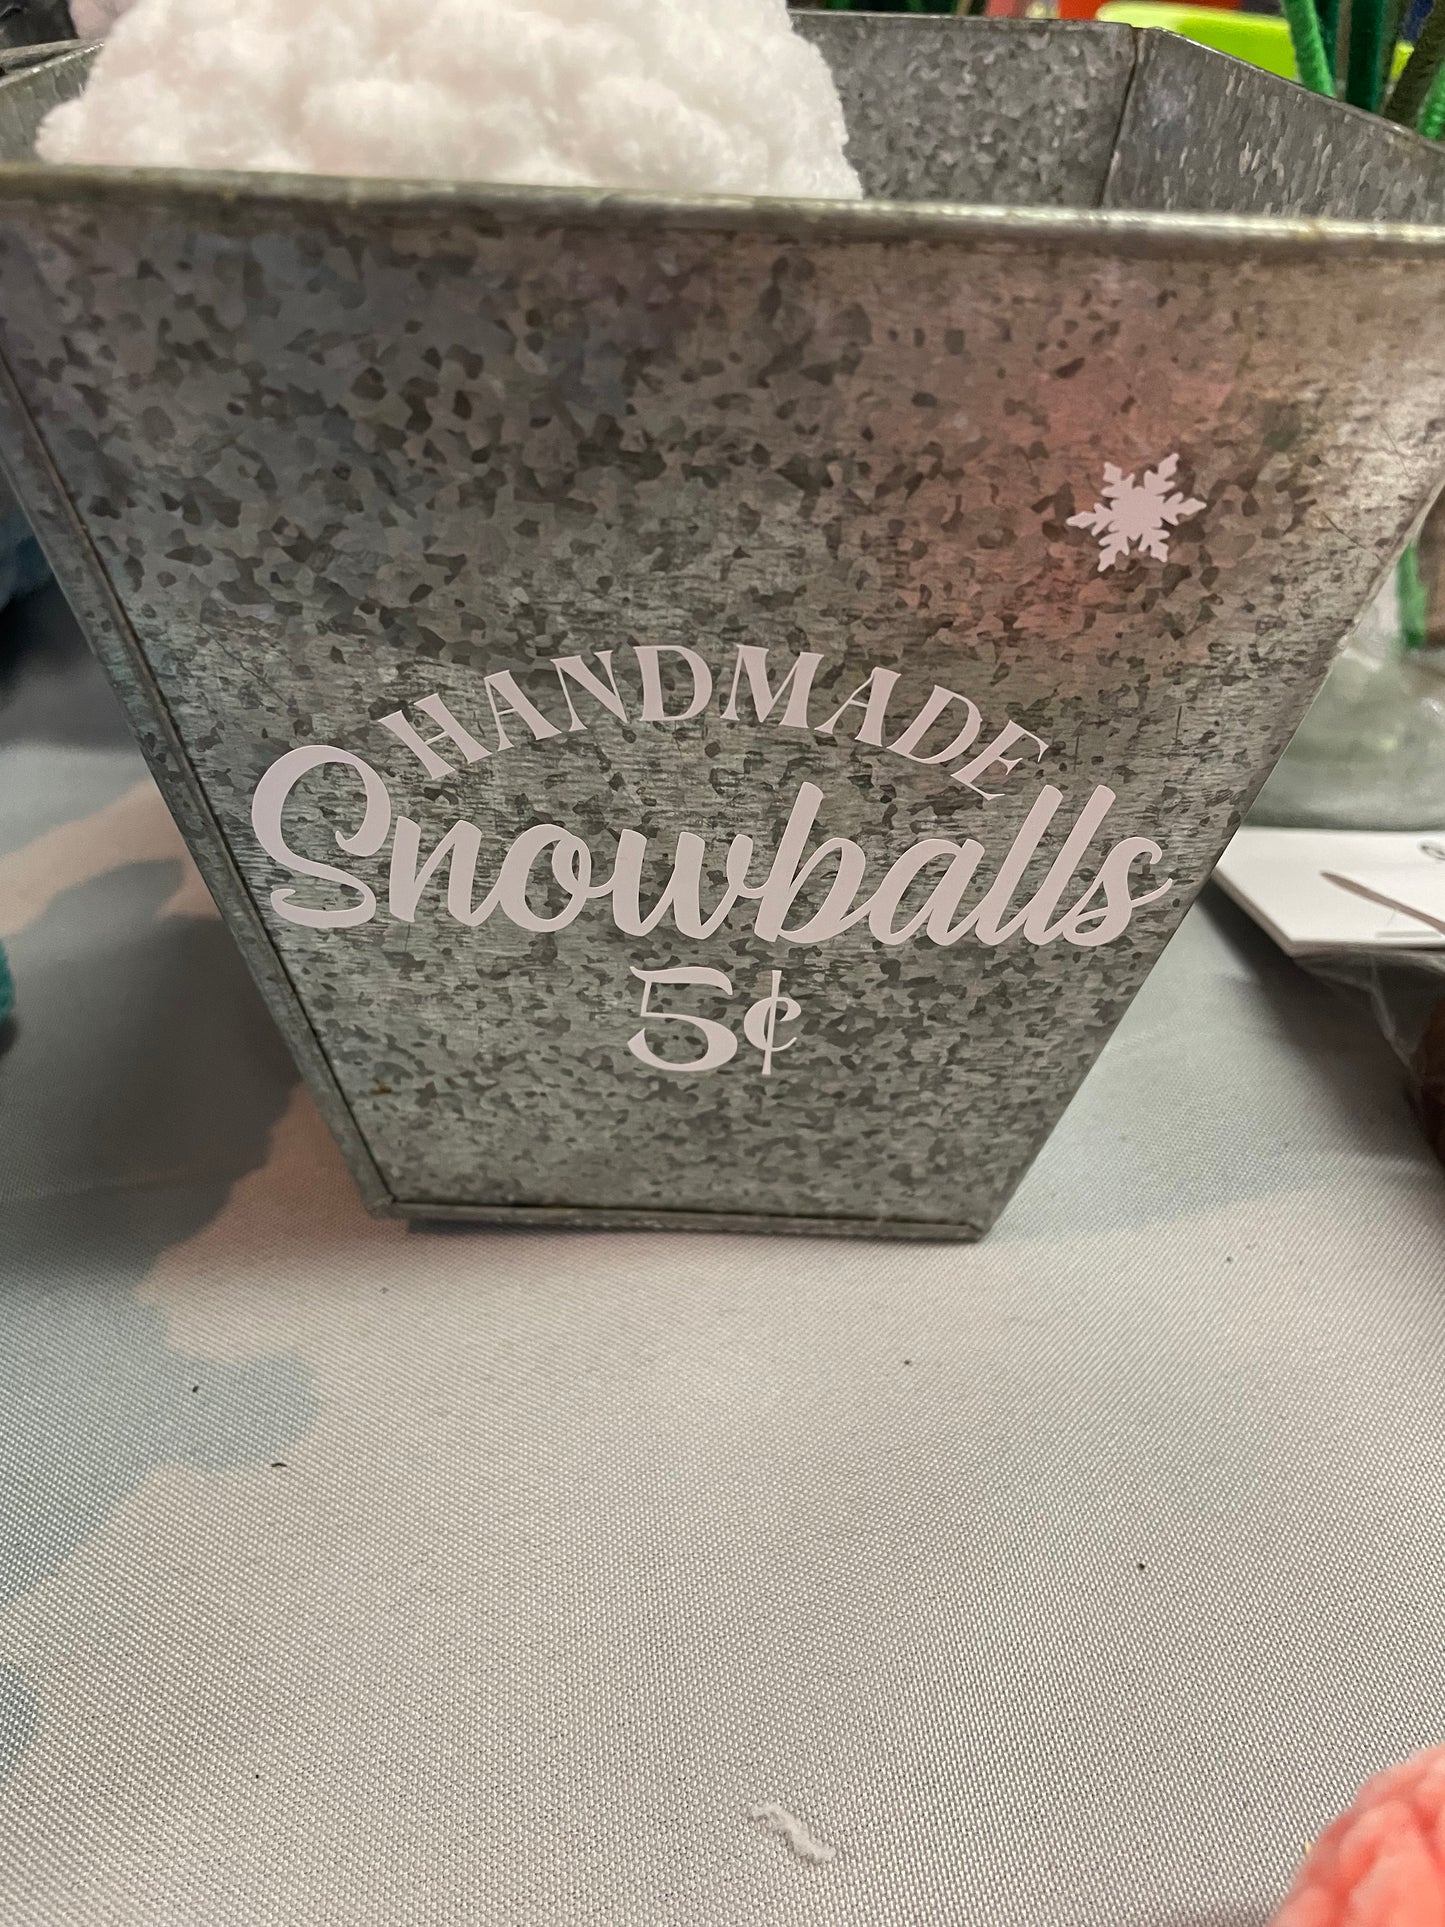 Handmade Snowballs Tin with Crochet Snowballs